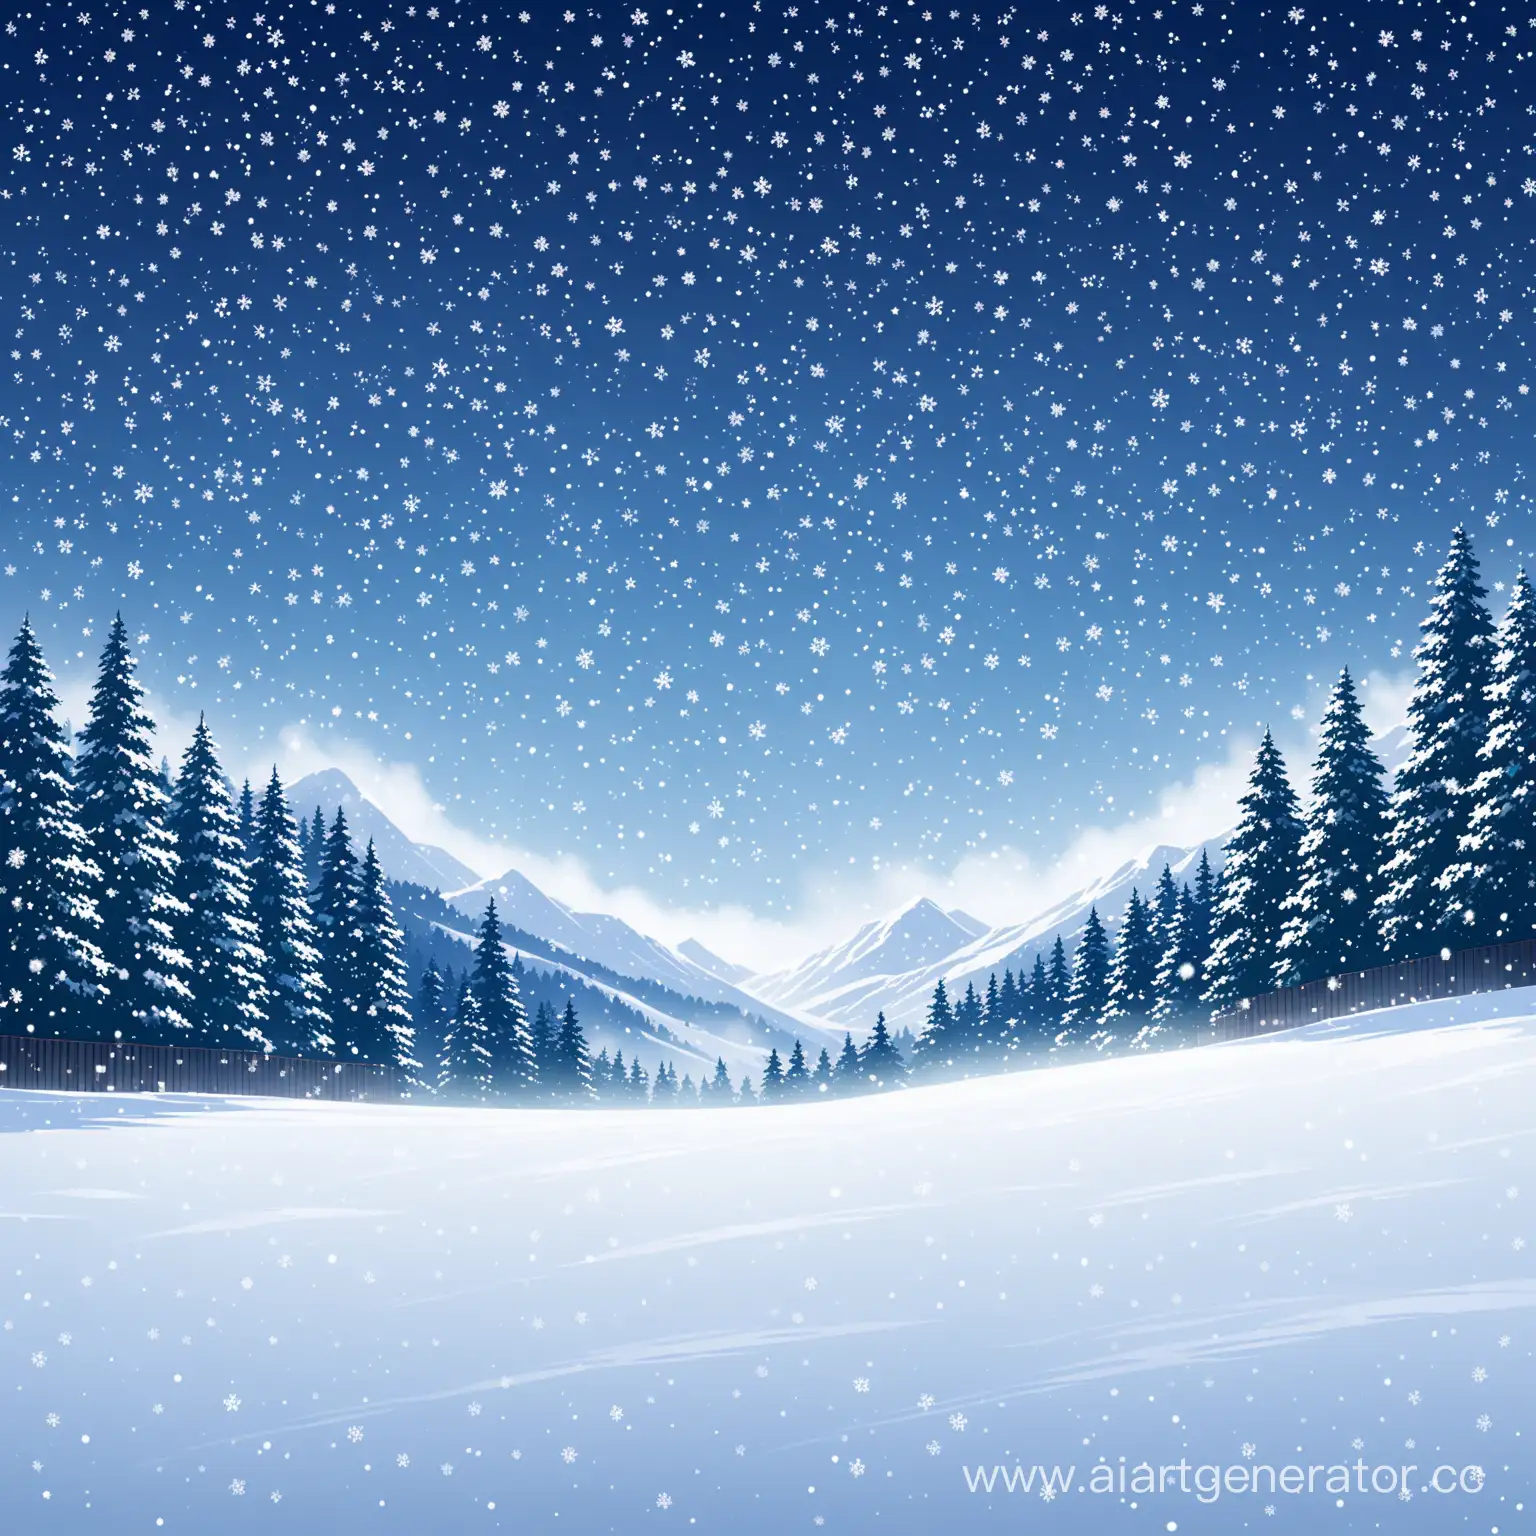 Snowfall-on-a-Winter-Landscape